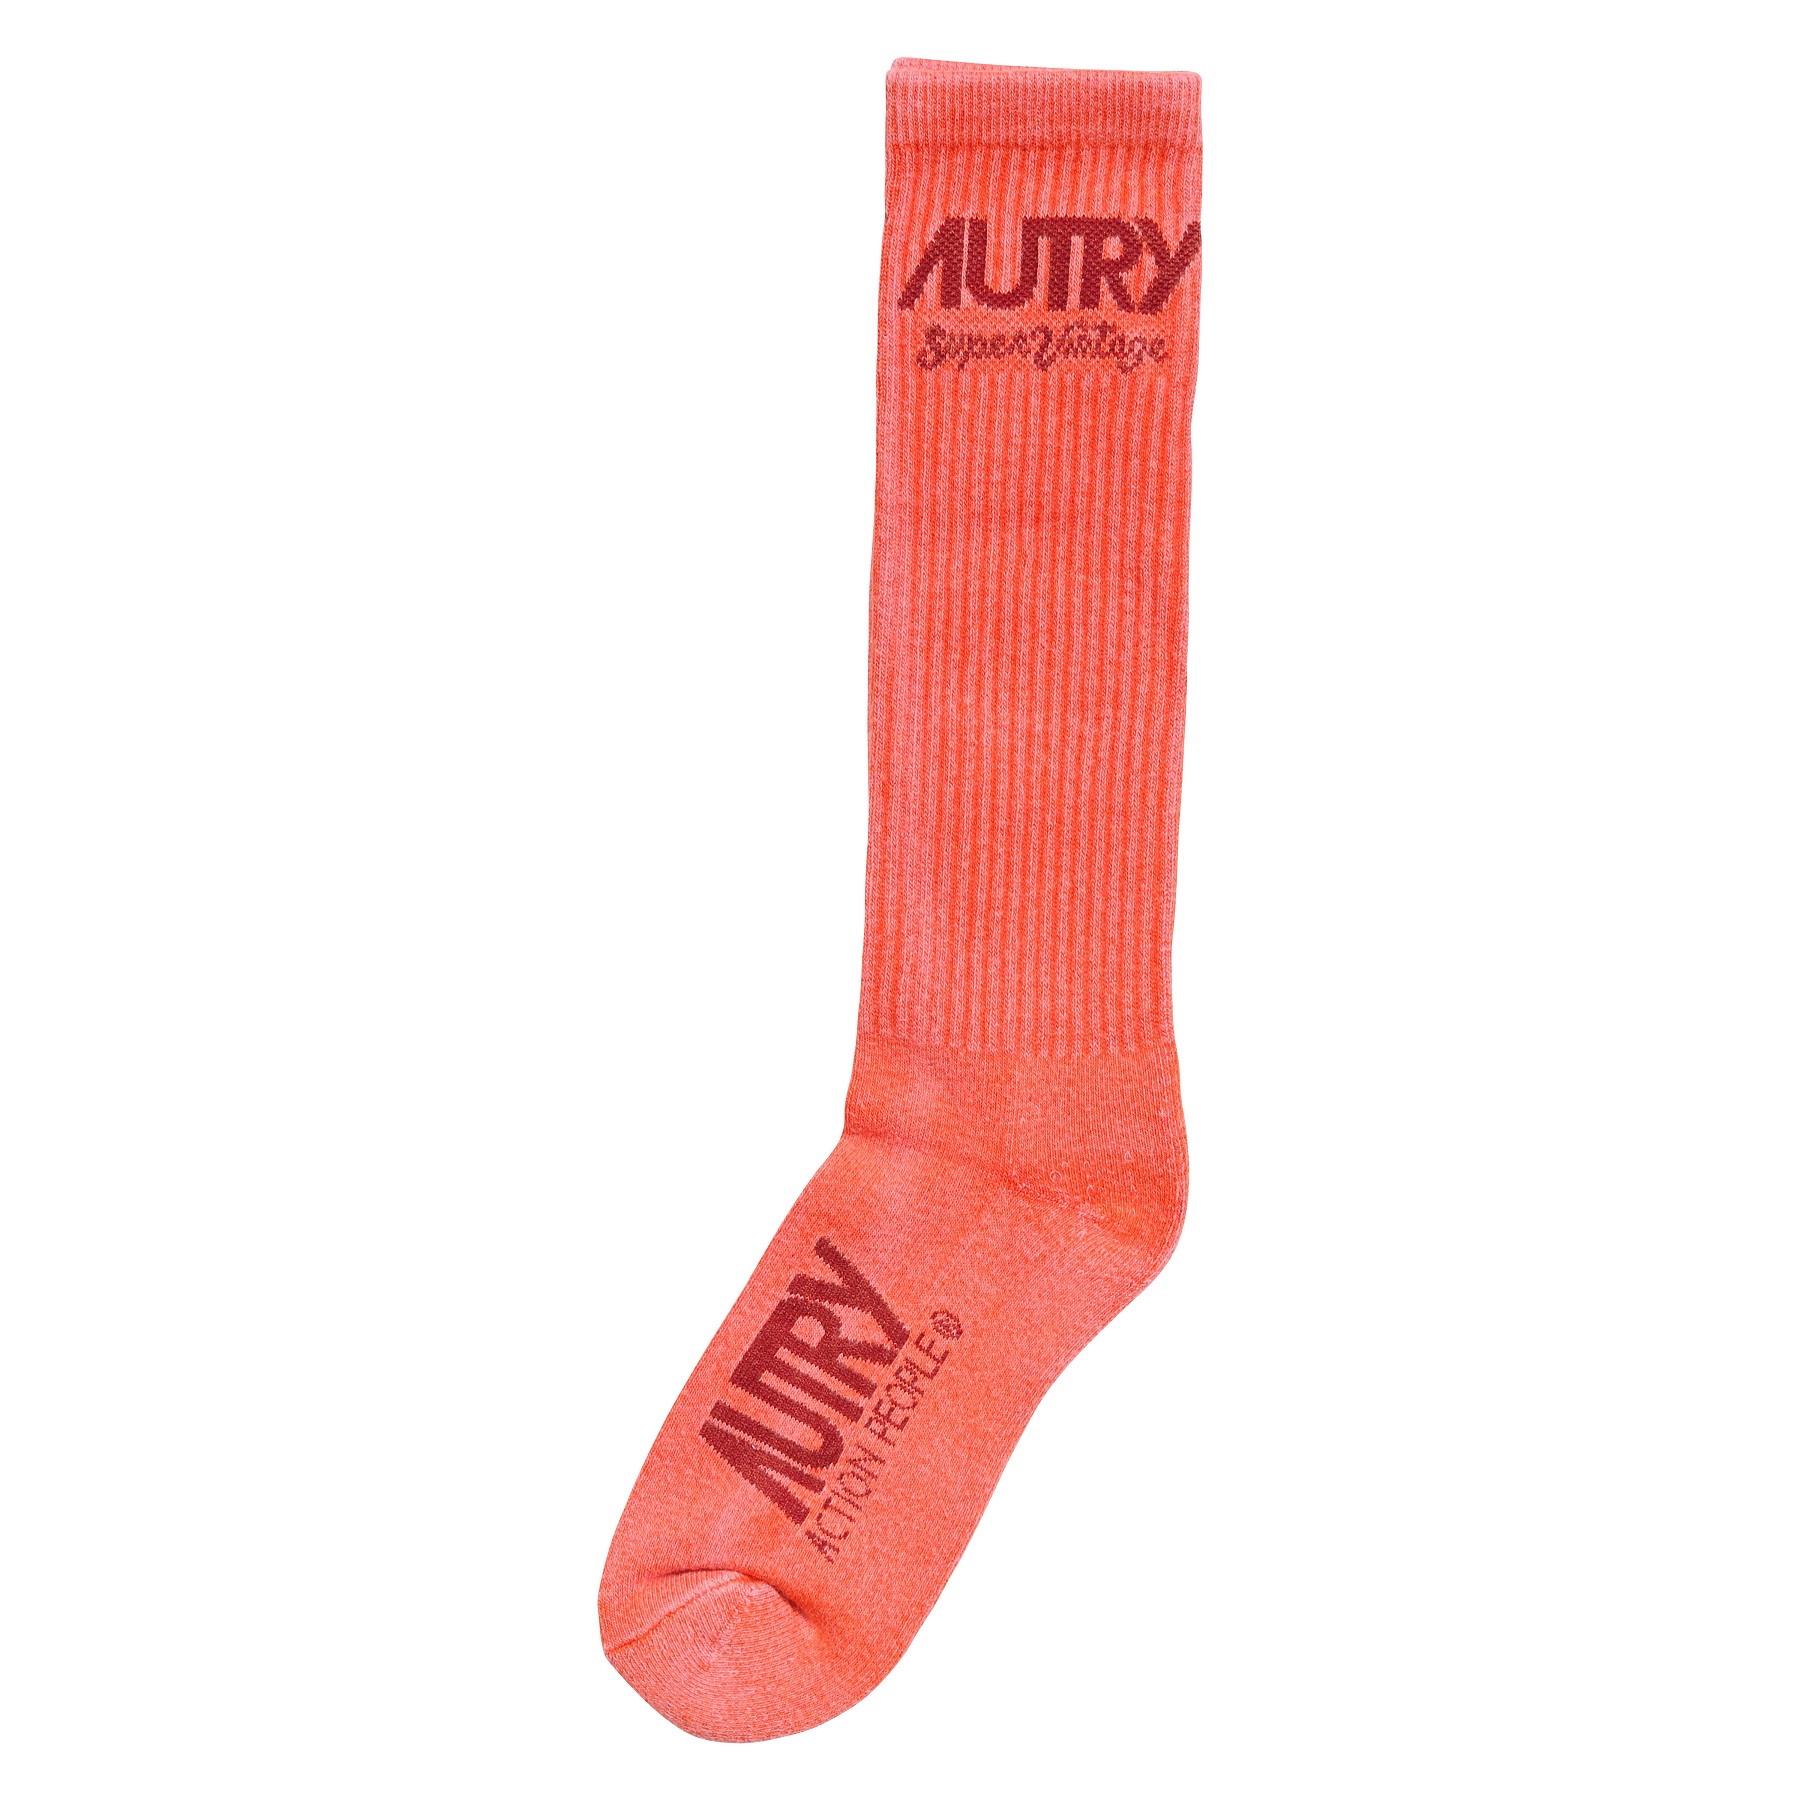 Autry Action Shoes Socks Supervintage Tinto Orange S/35-38